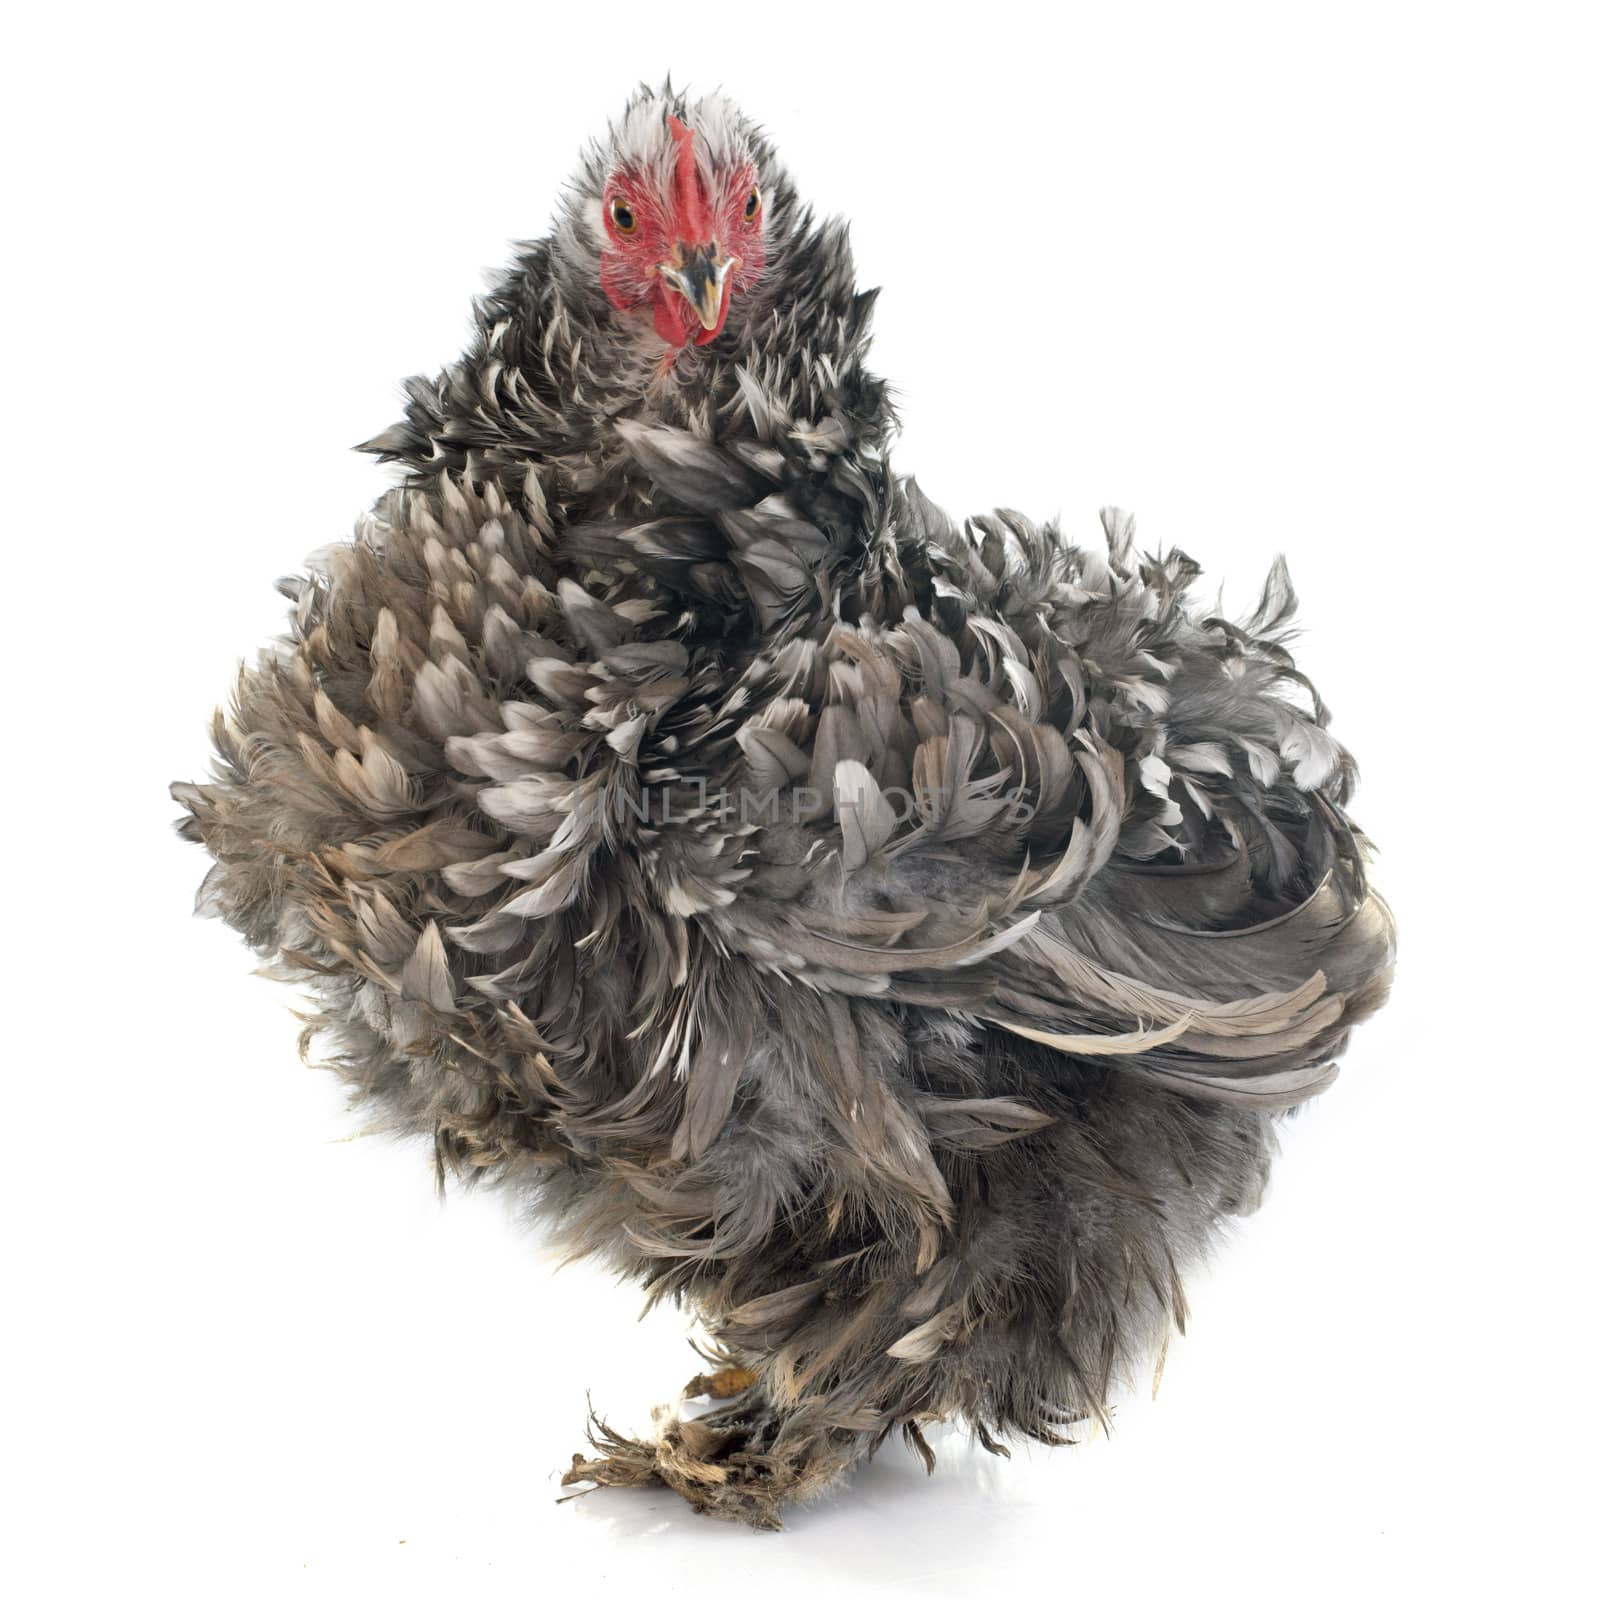 Curly Feathered chicken Pekin by cynoclub